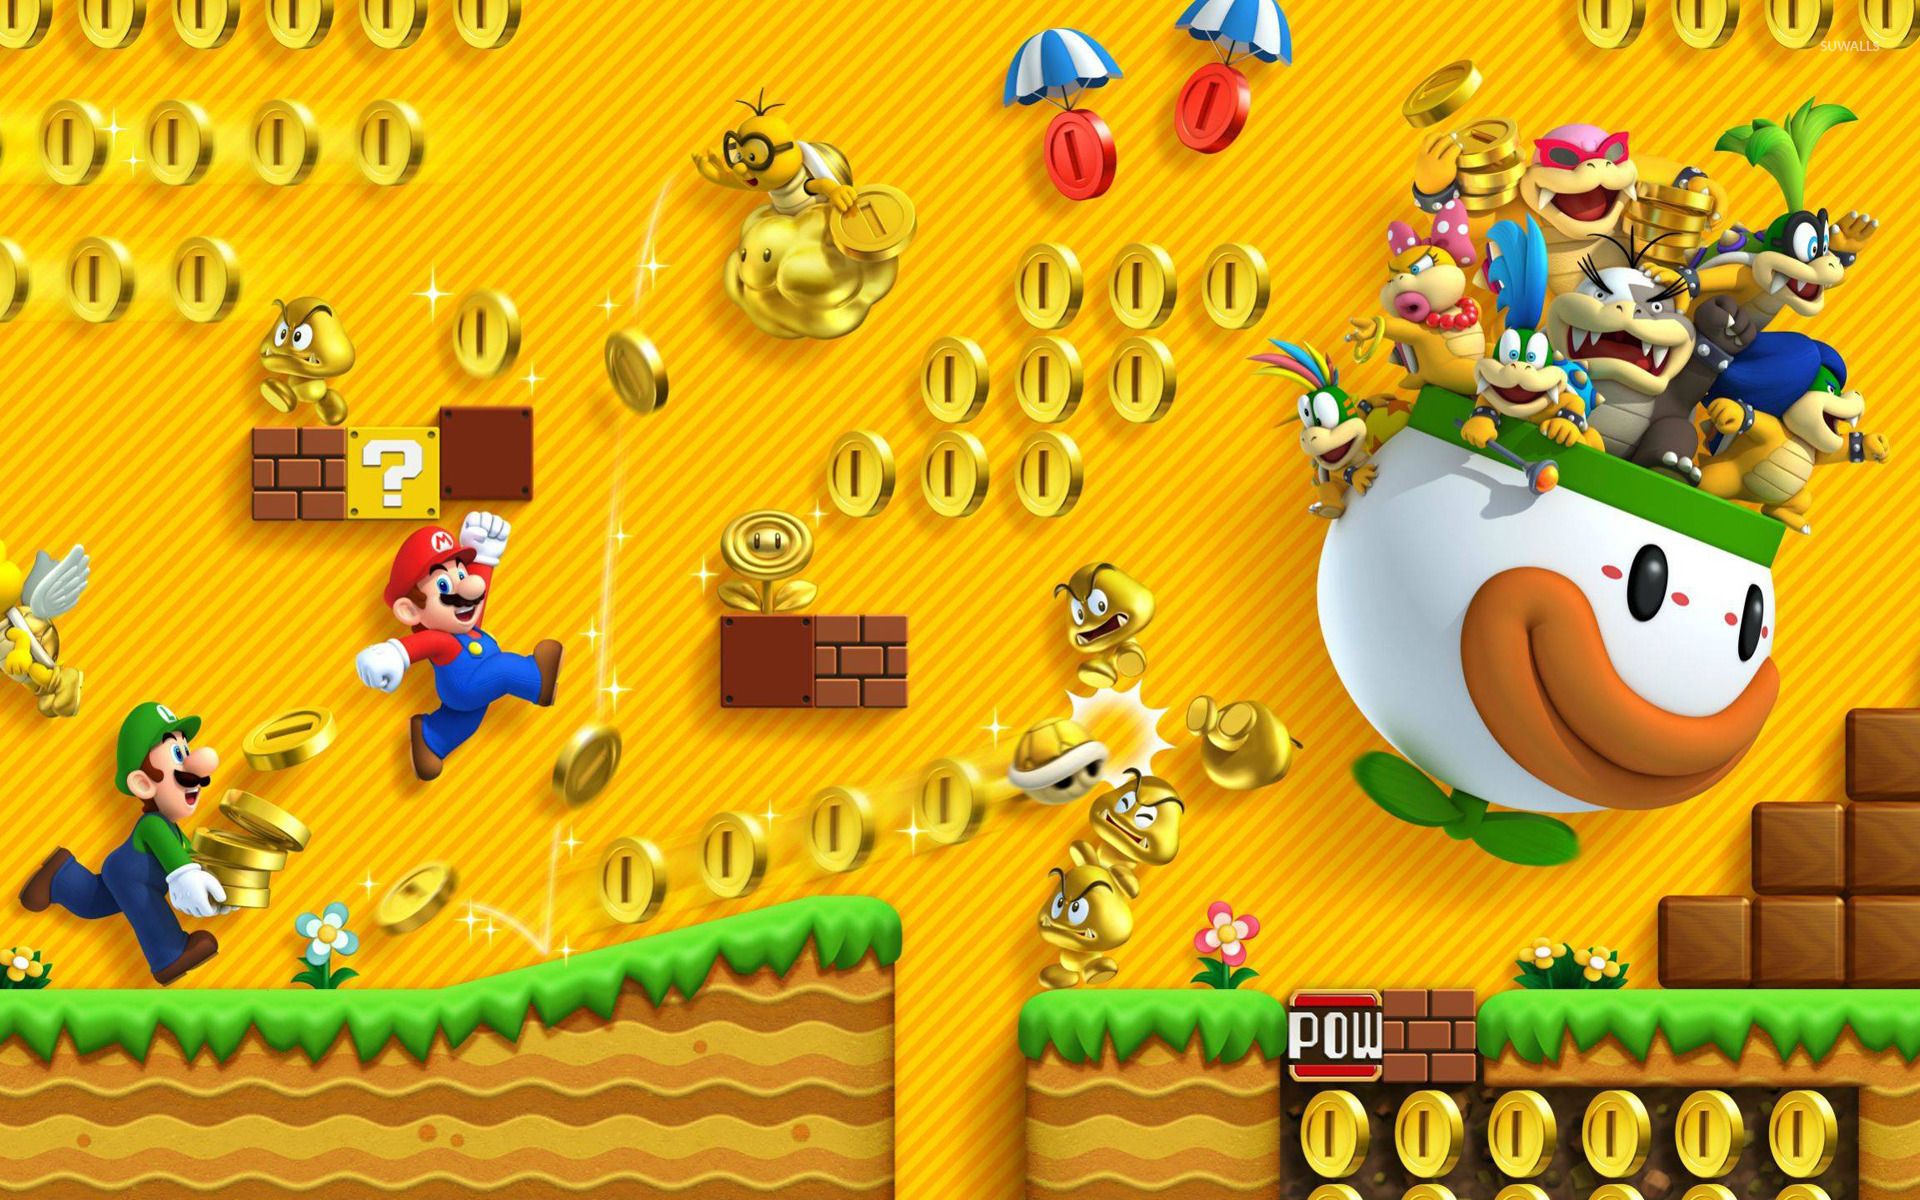 Fondo de pantalla de Super Mario Bros. 2 - Fondos de pantalla de juegos - # 14849